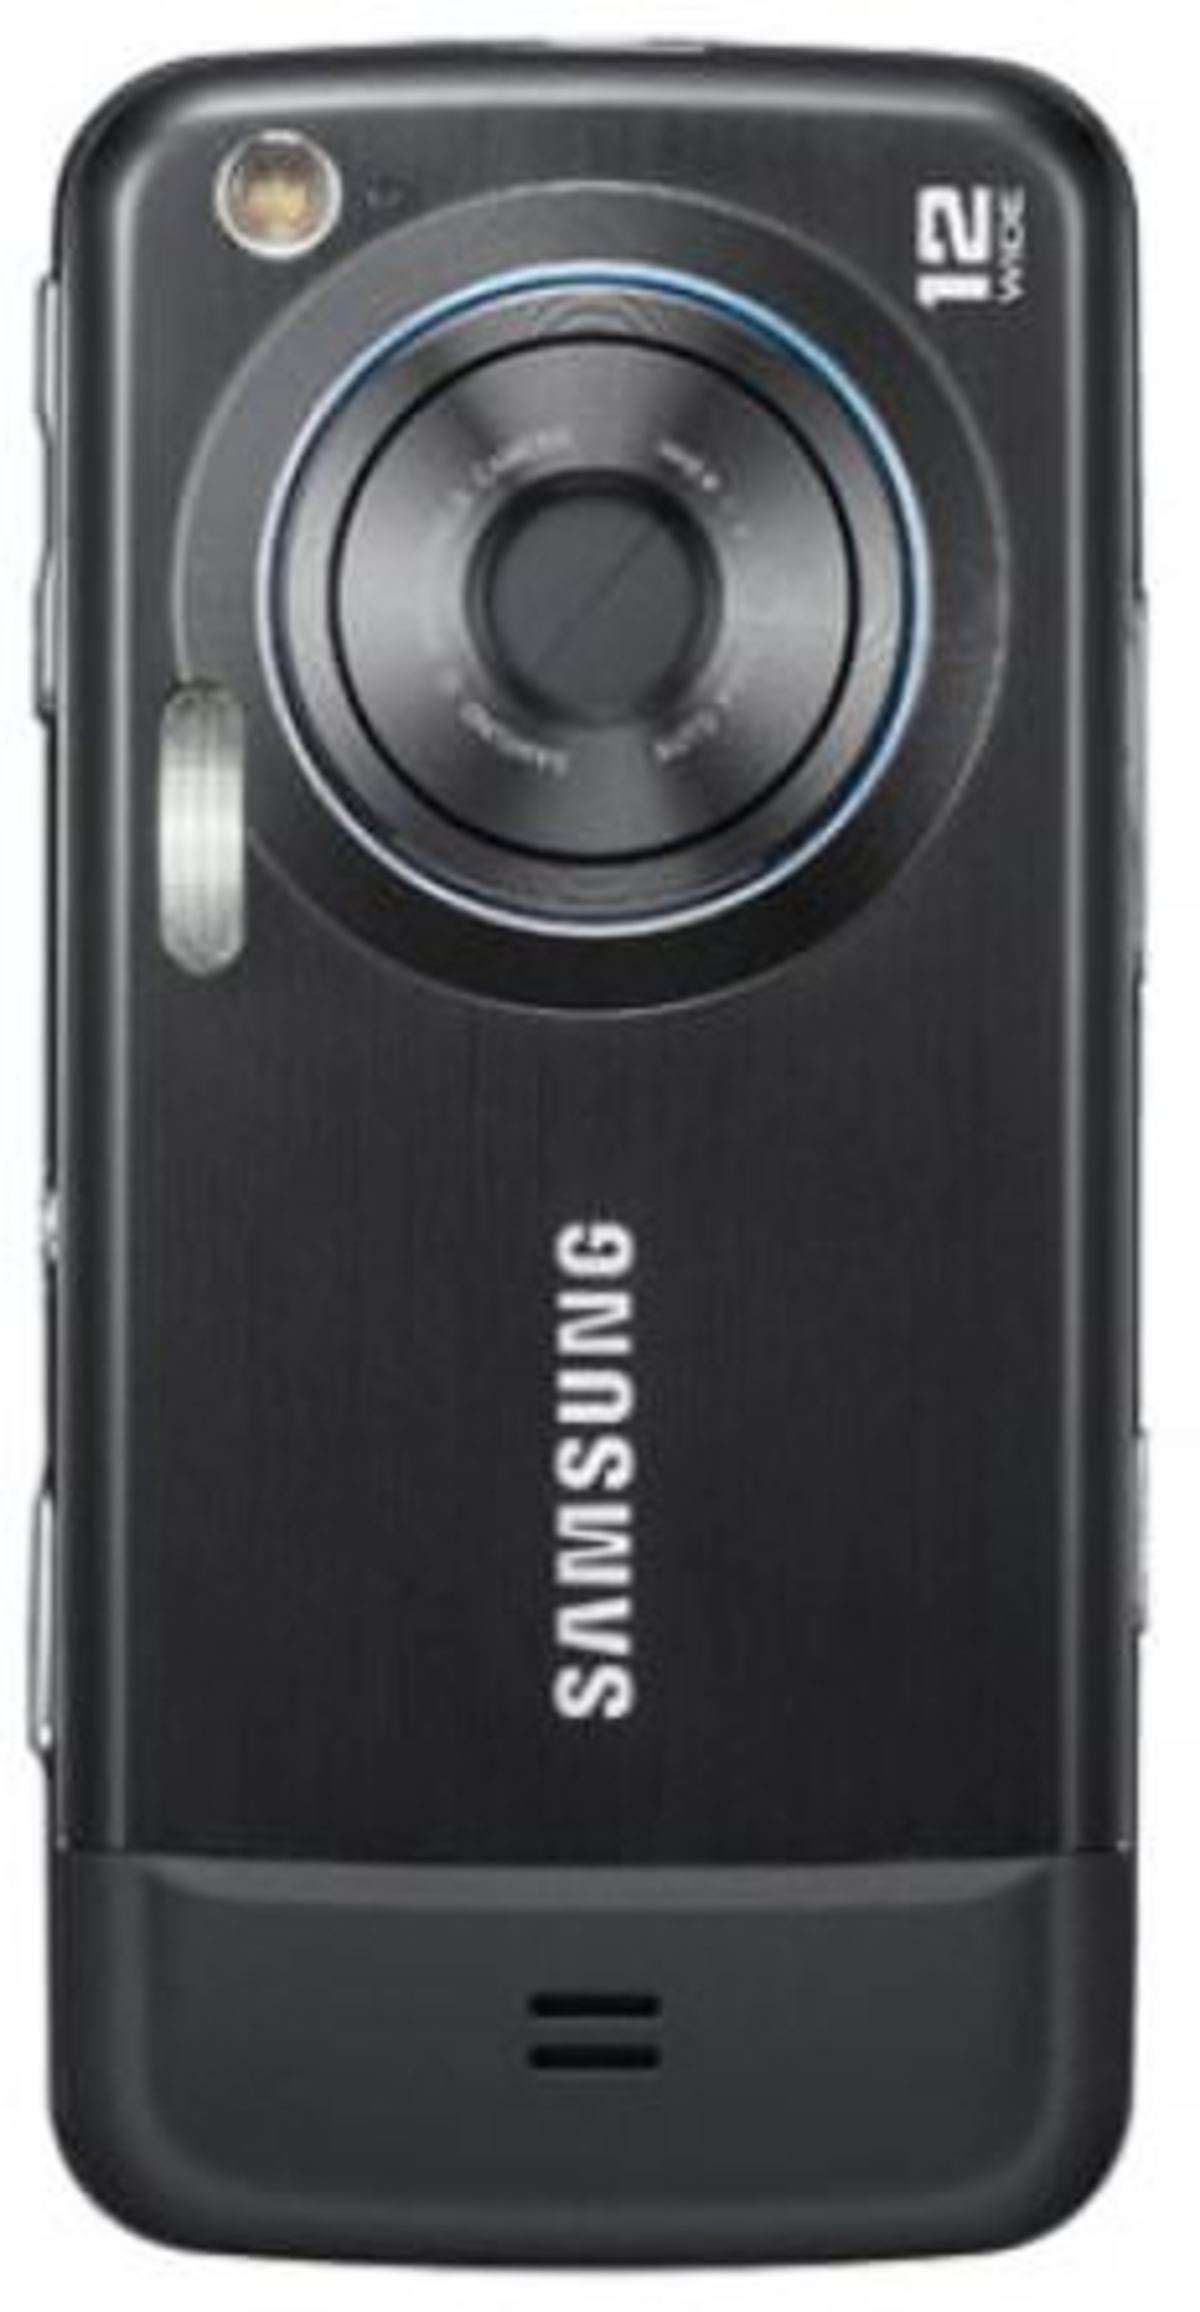 M12 samsung телефон. Pixon12 m8910. Samsung m8910 pixon12. Samsung m12. Телефон Samsung m12.